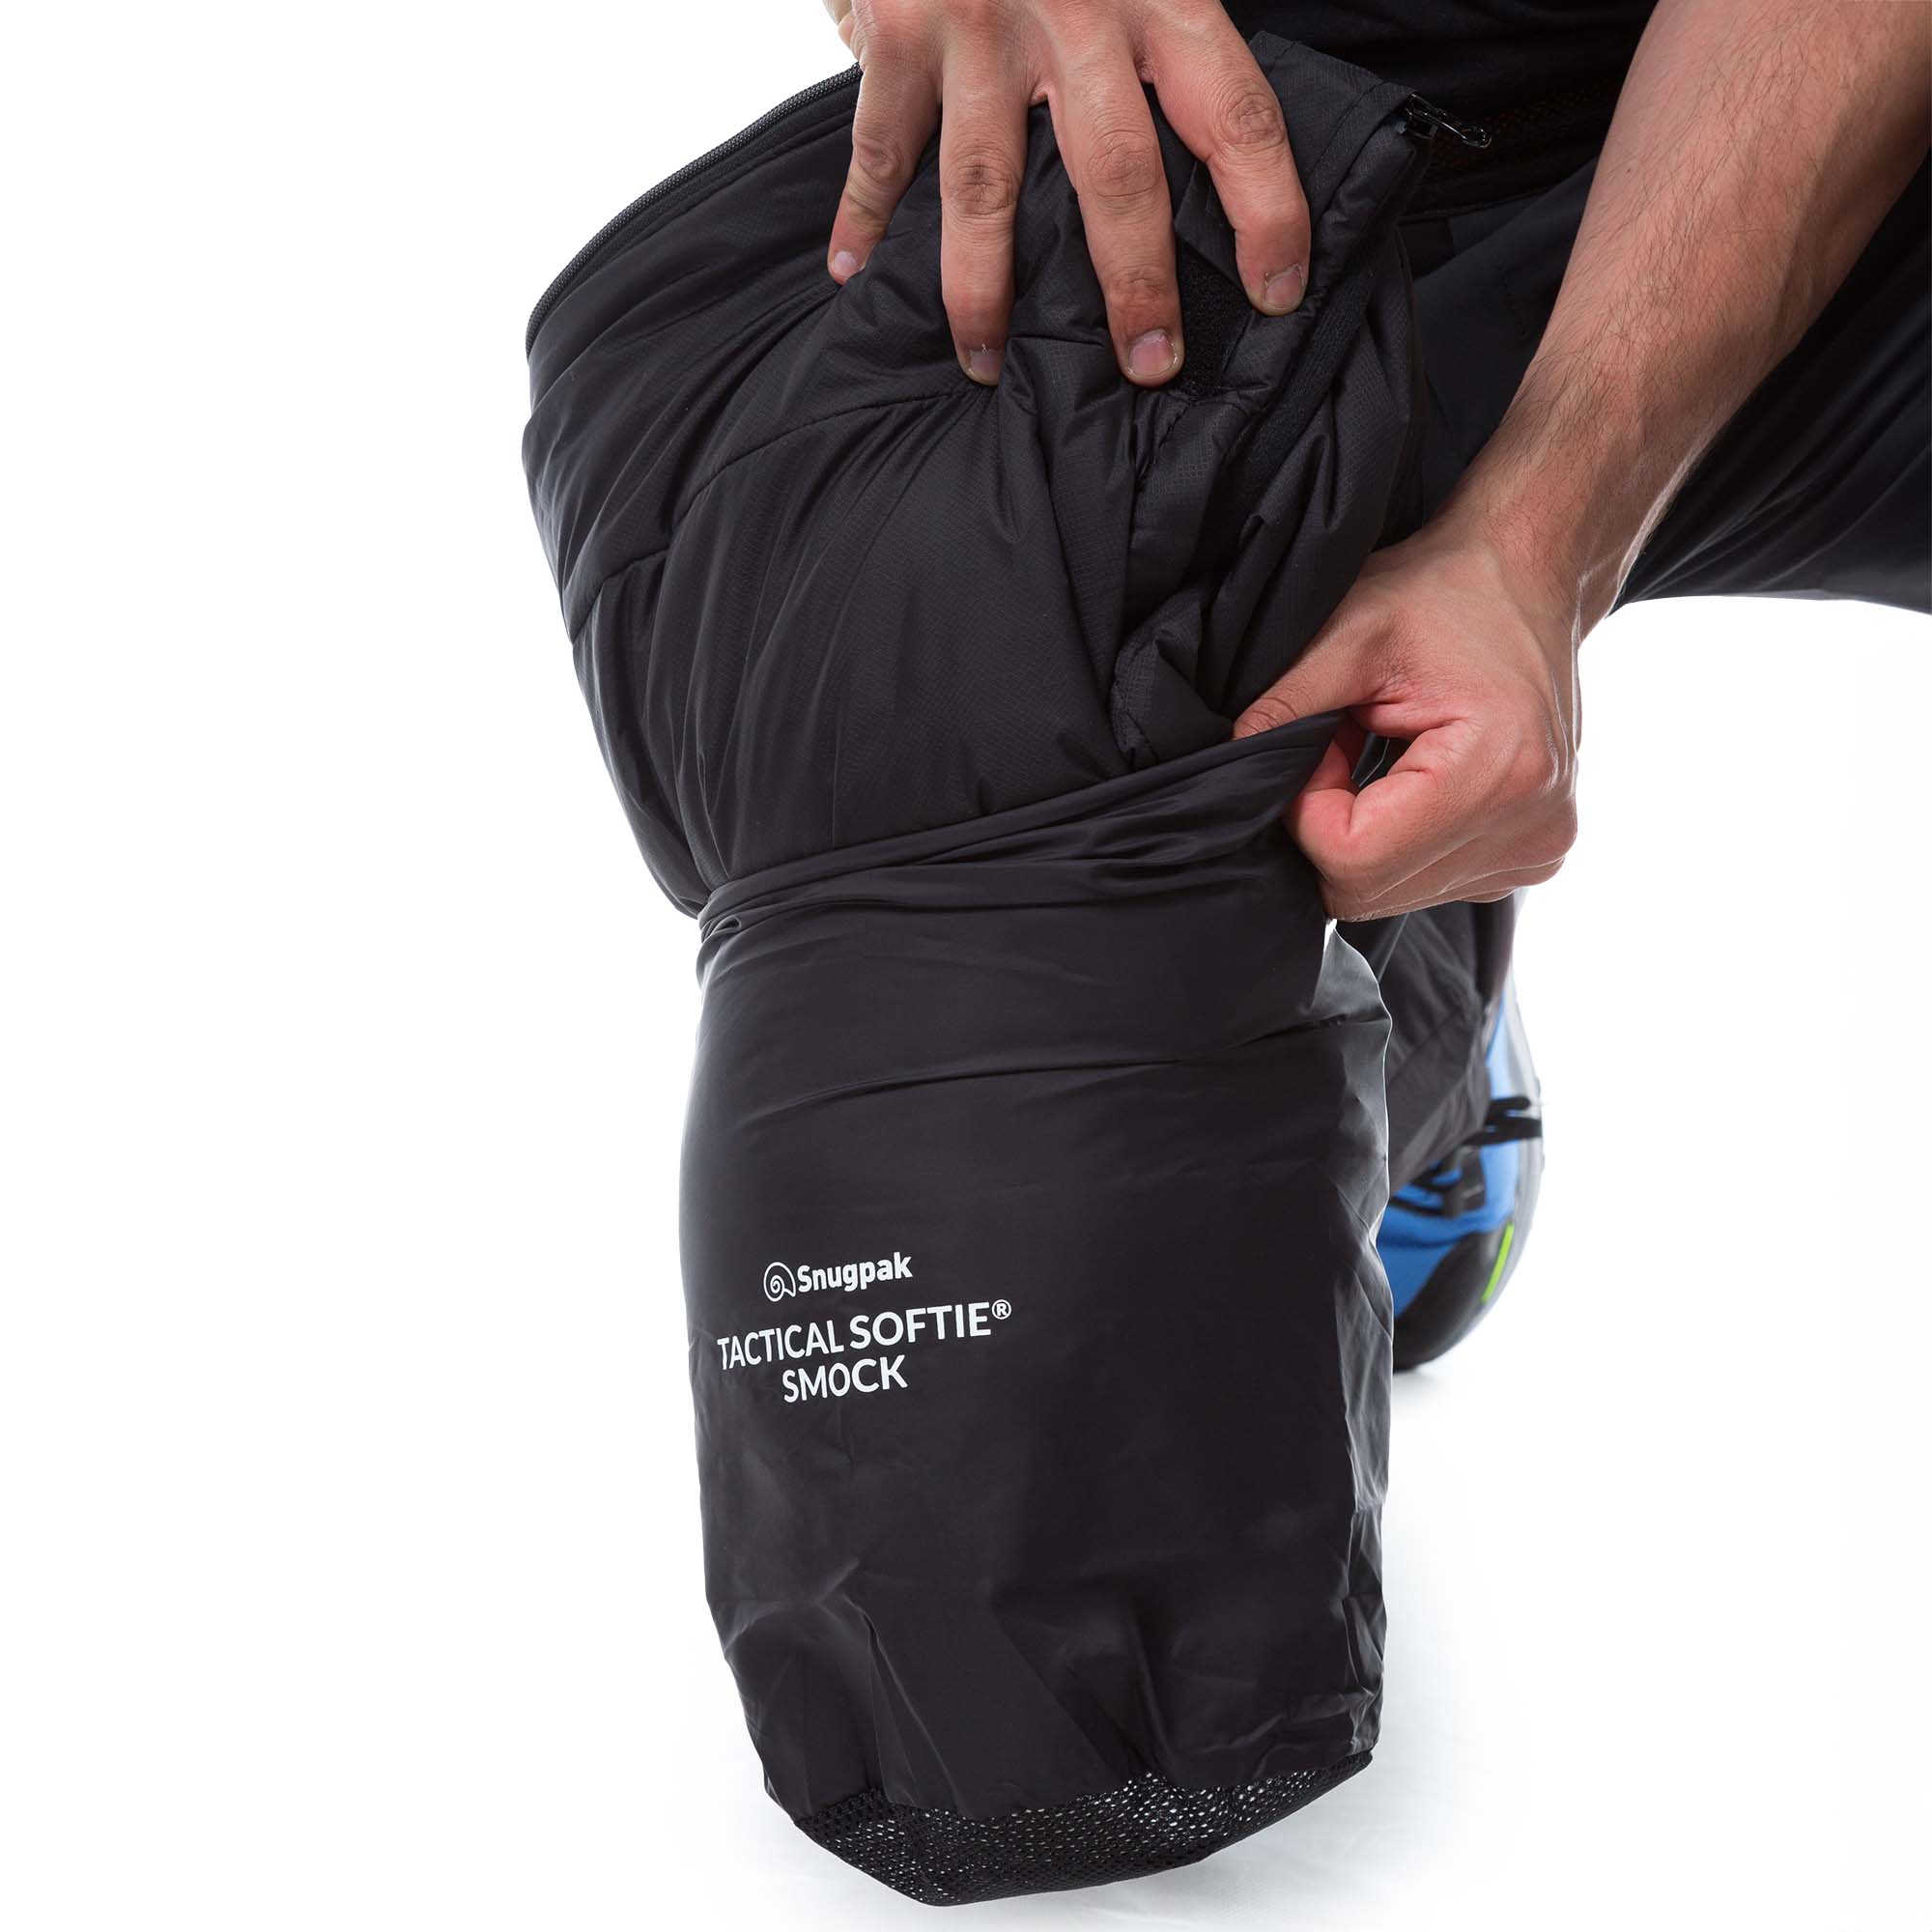 Snugpak Tactical Softie® Insulated Smock Jacket